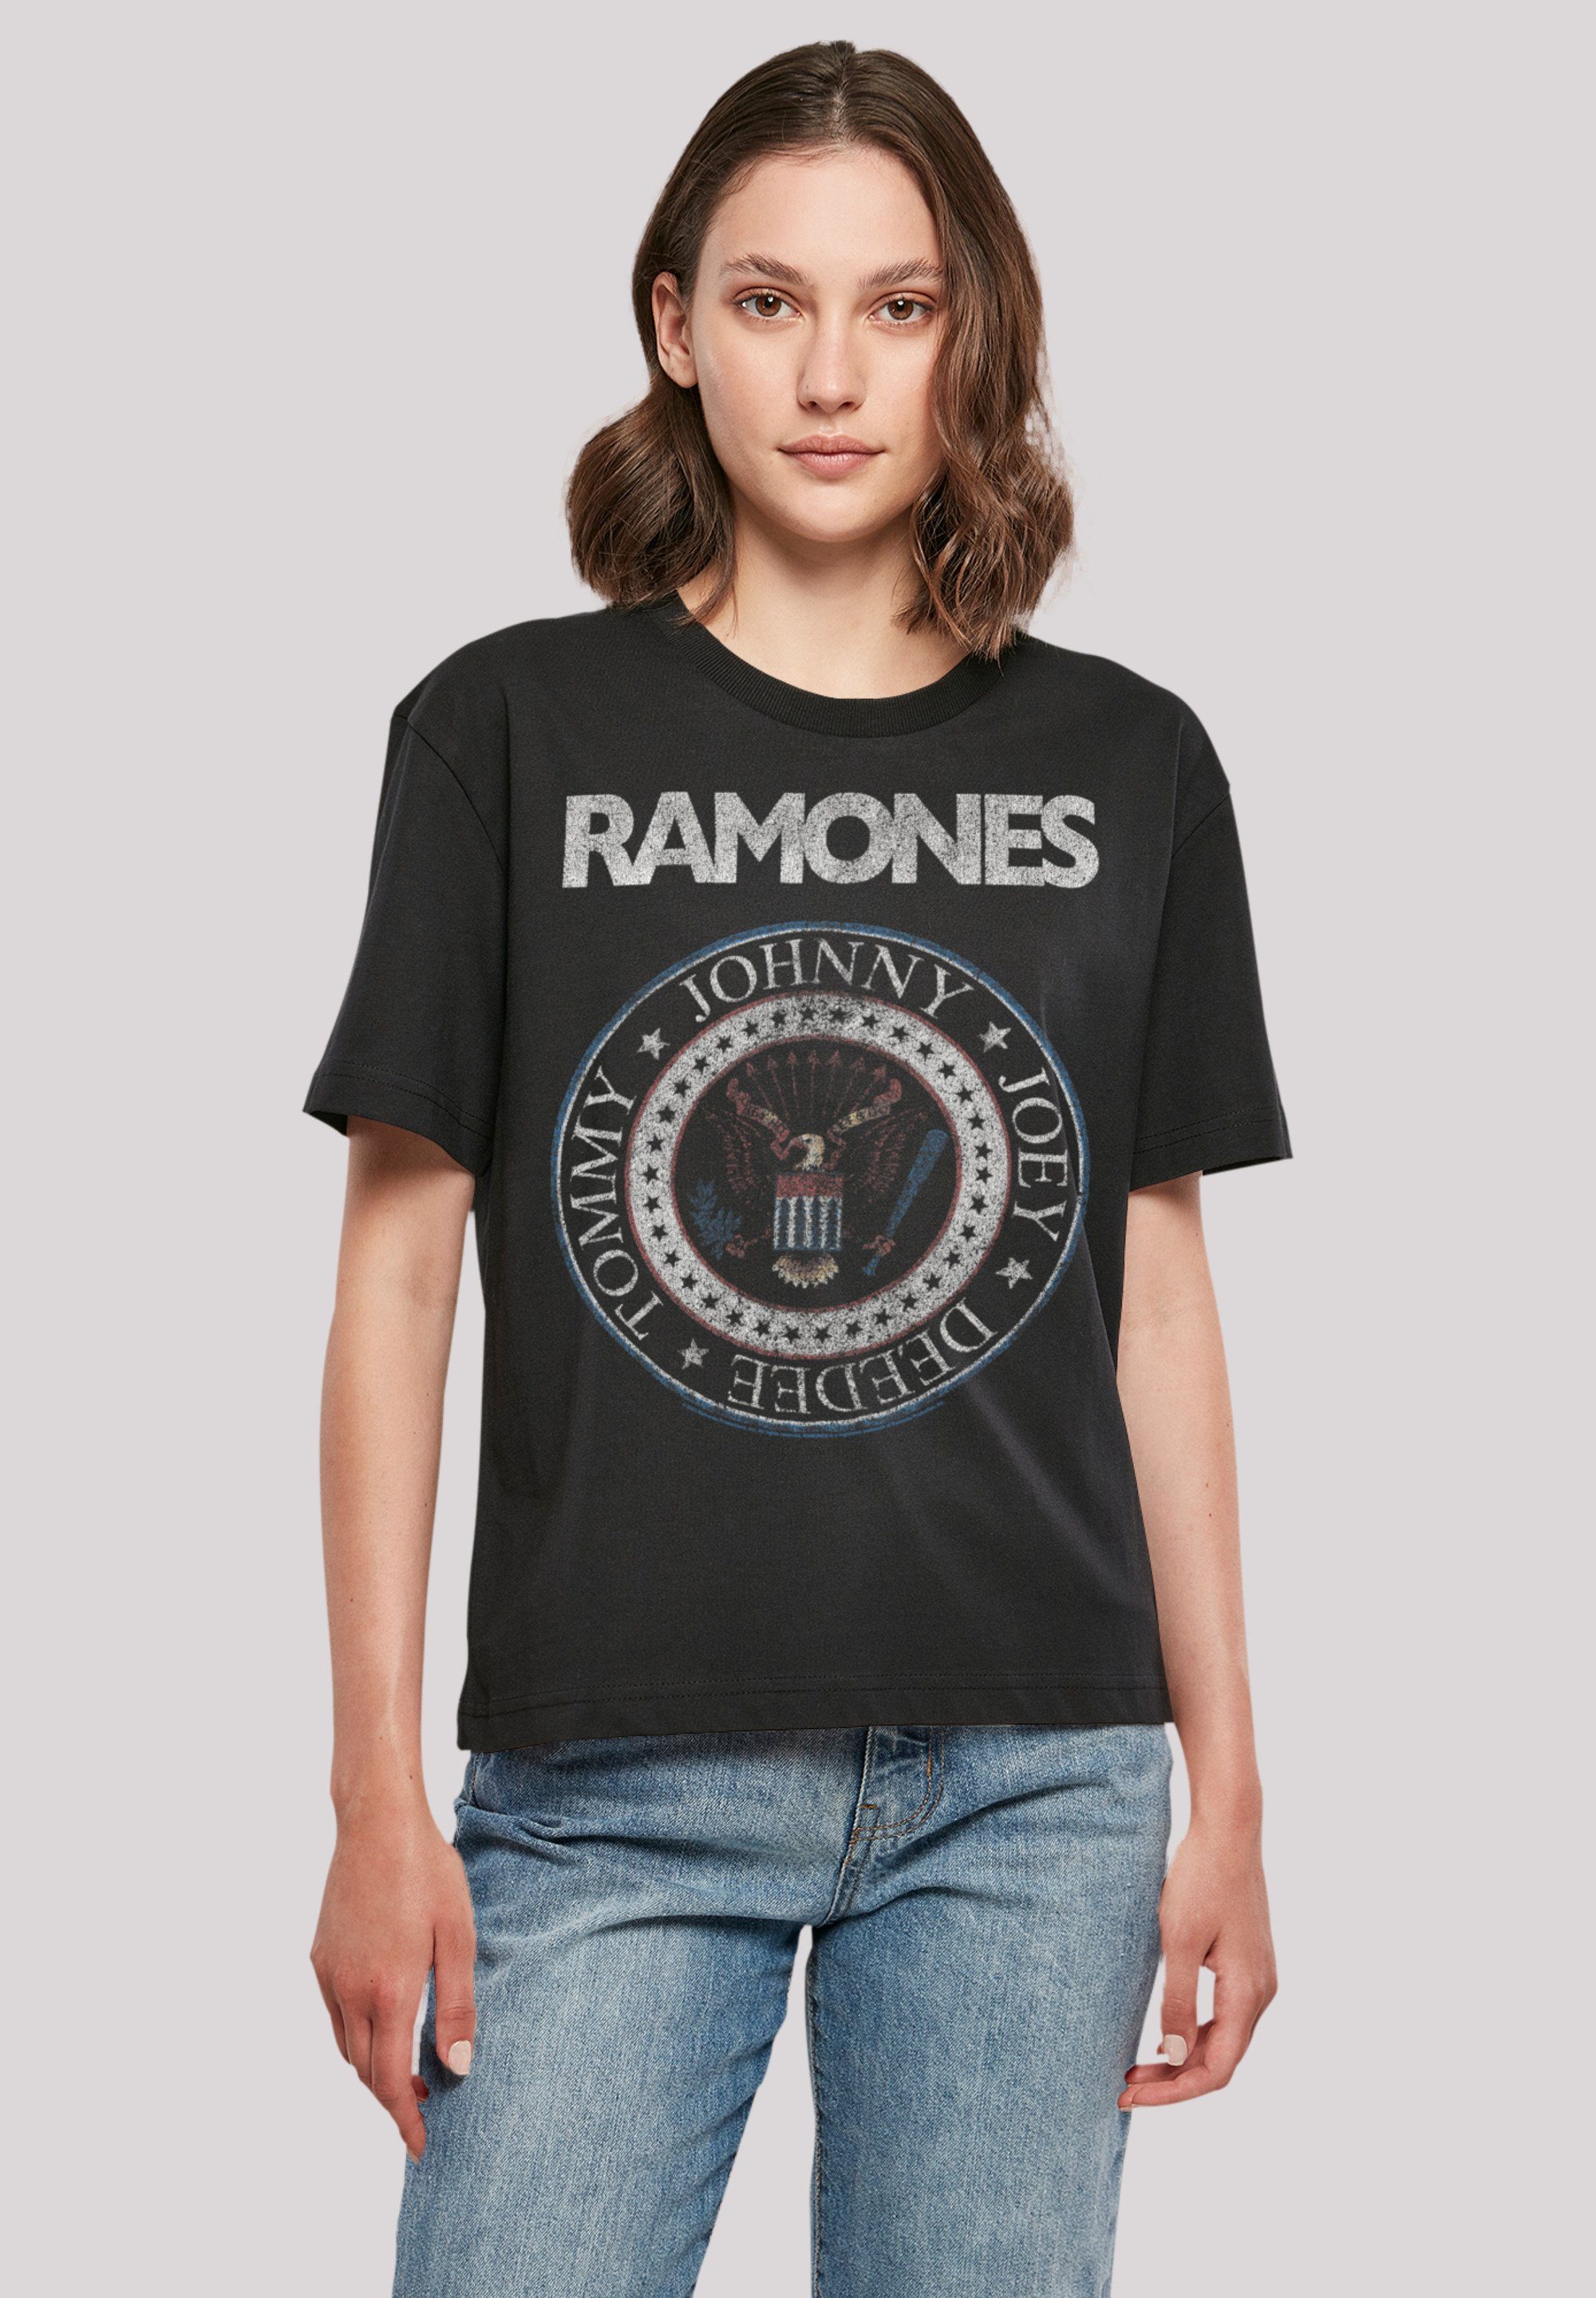 F4NT4STIC T-Shirt Ramones Rock Musik Qualität, kombinierbar Red Band White Premium Band, und vielseitig Komfortabel And Rock-Musik, Seal